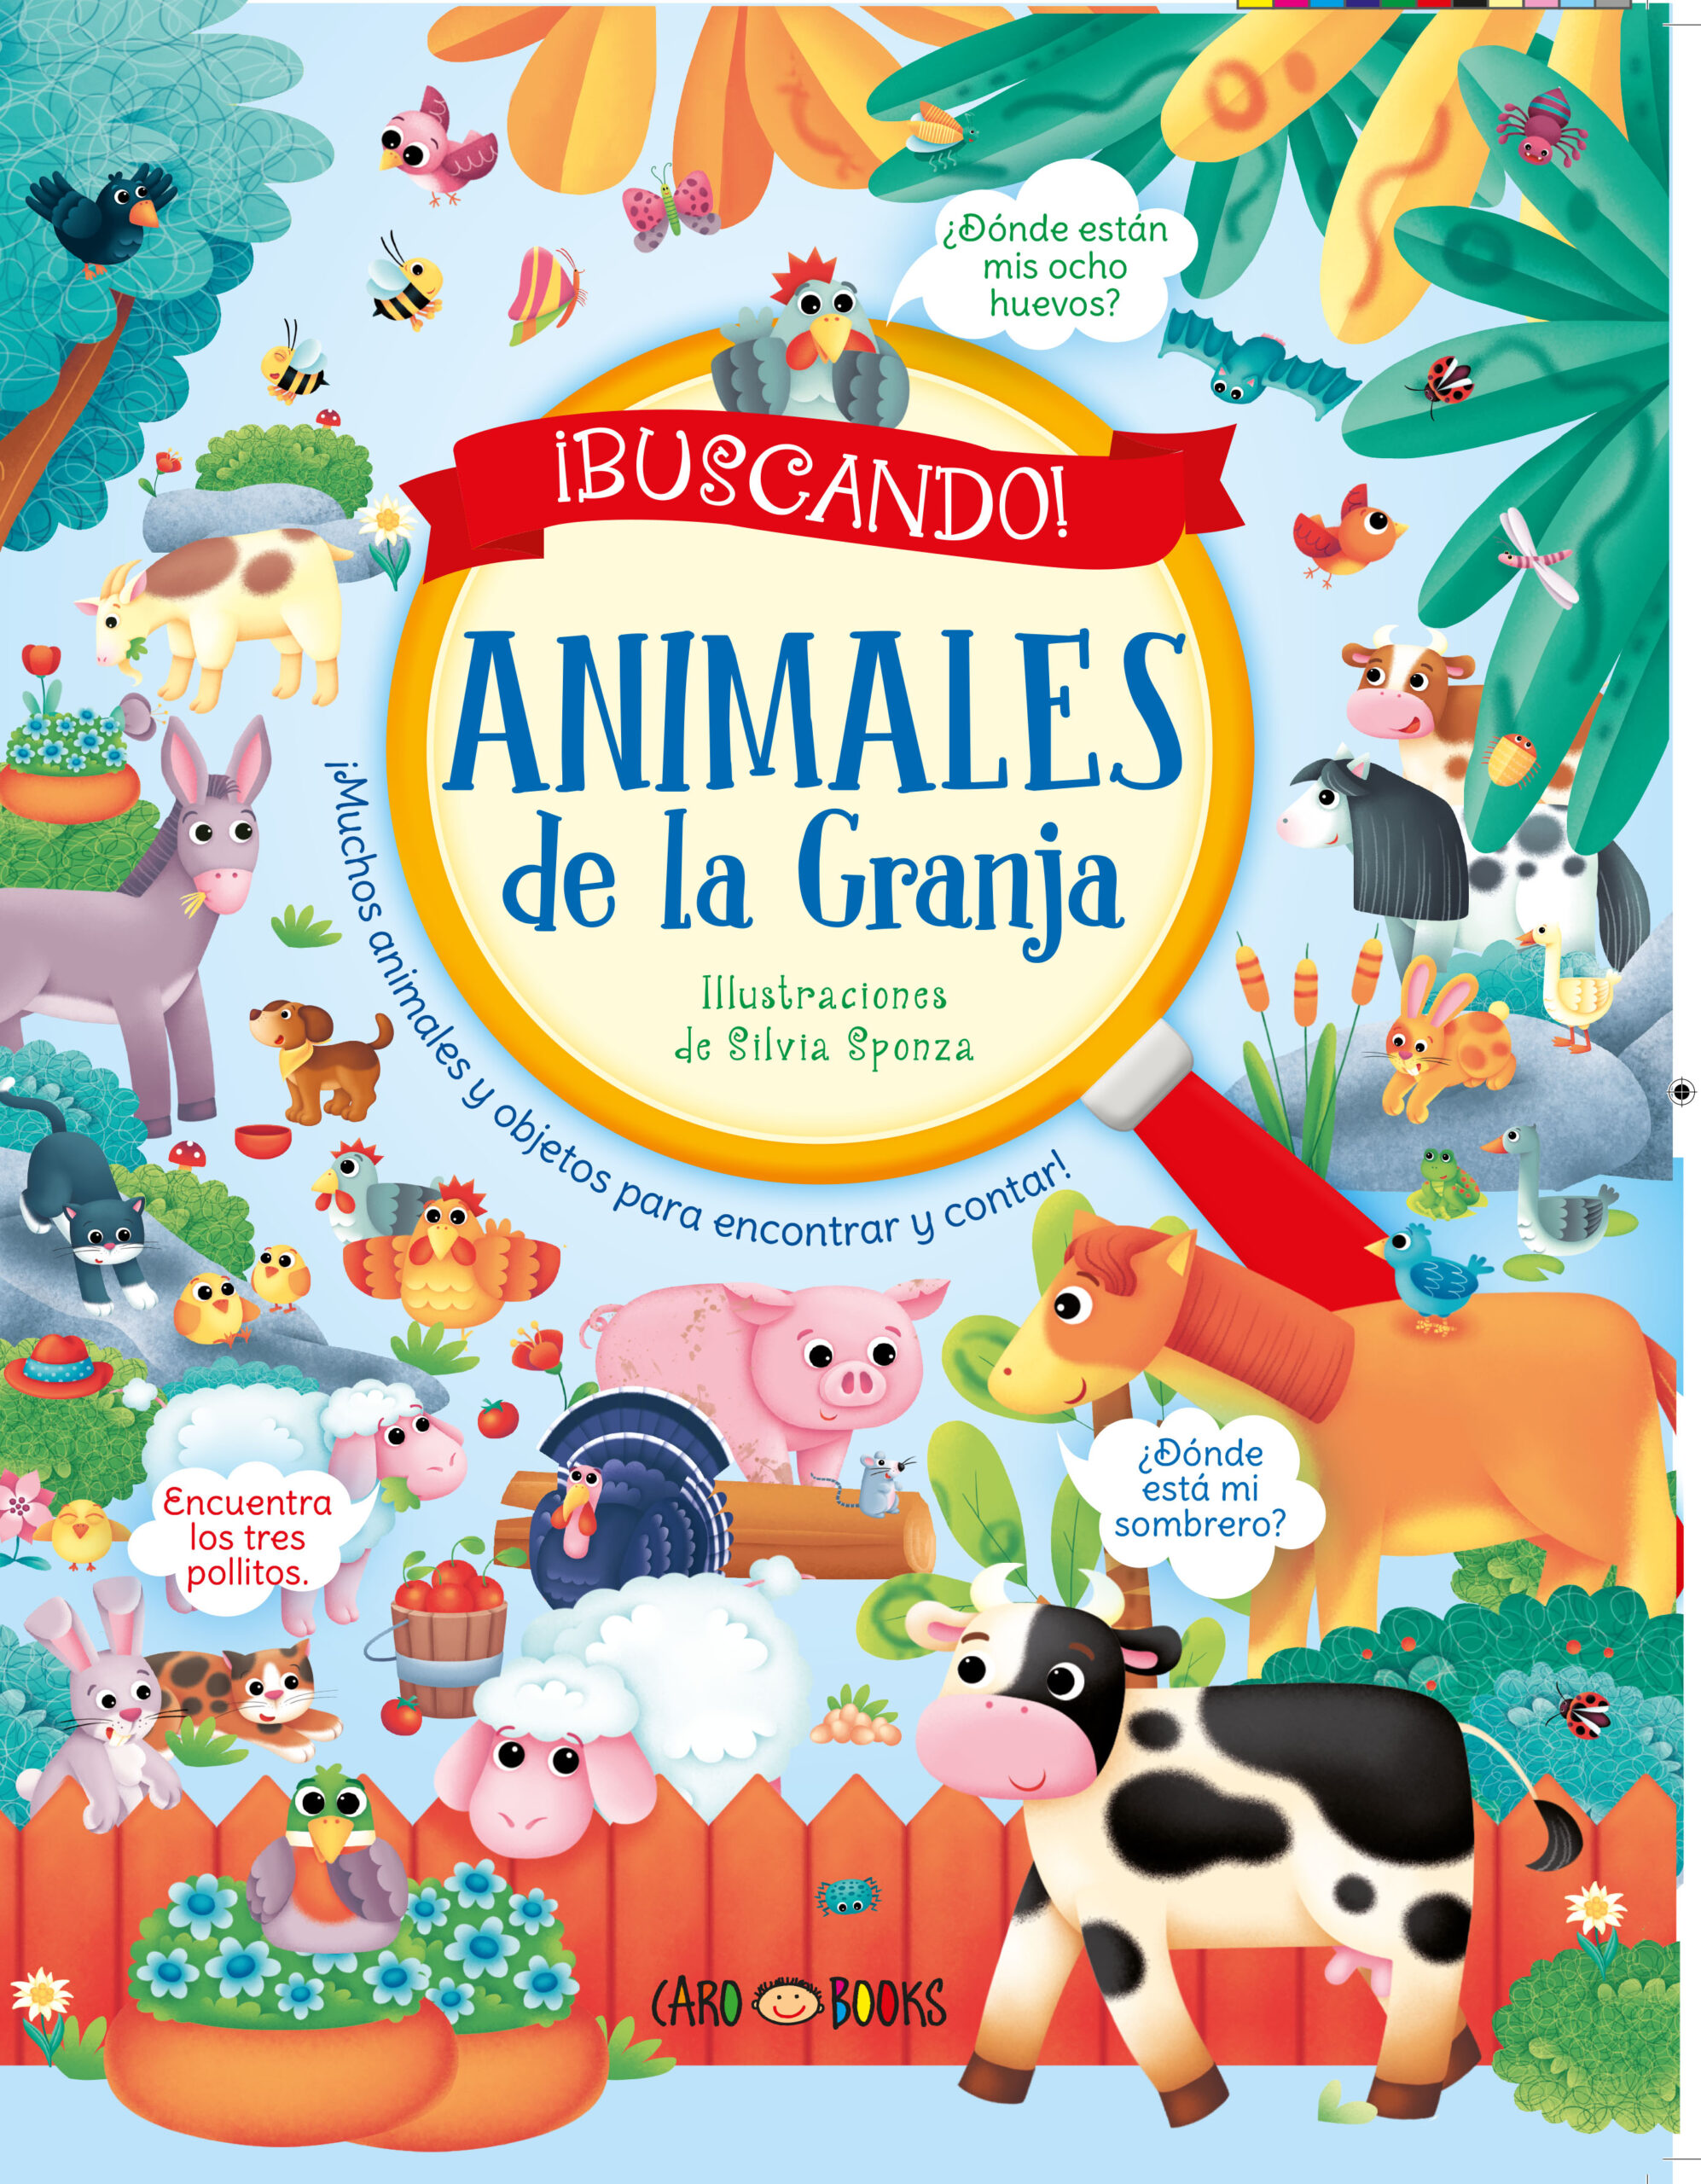 Buscando- Animales de la granja - Bora Books